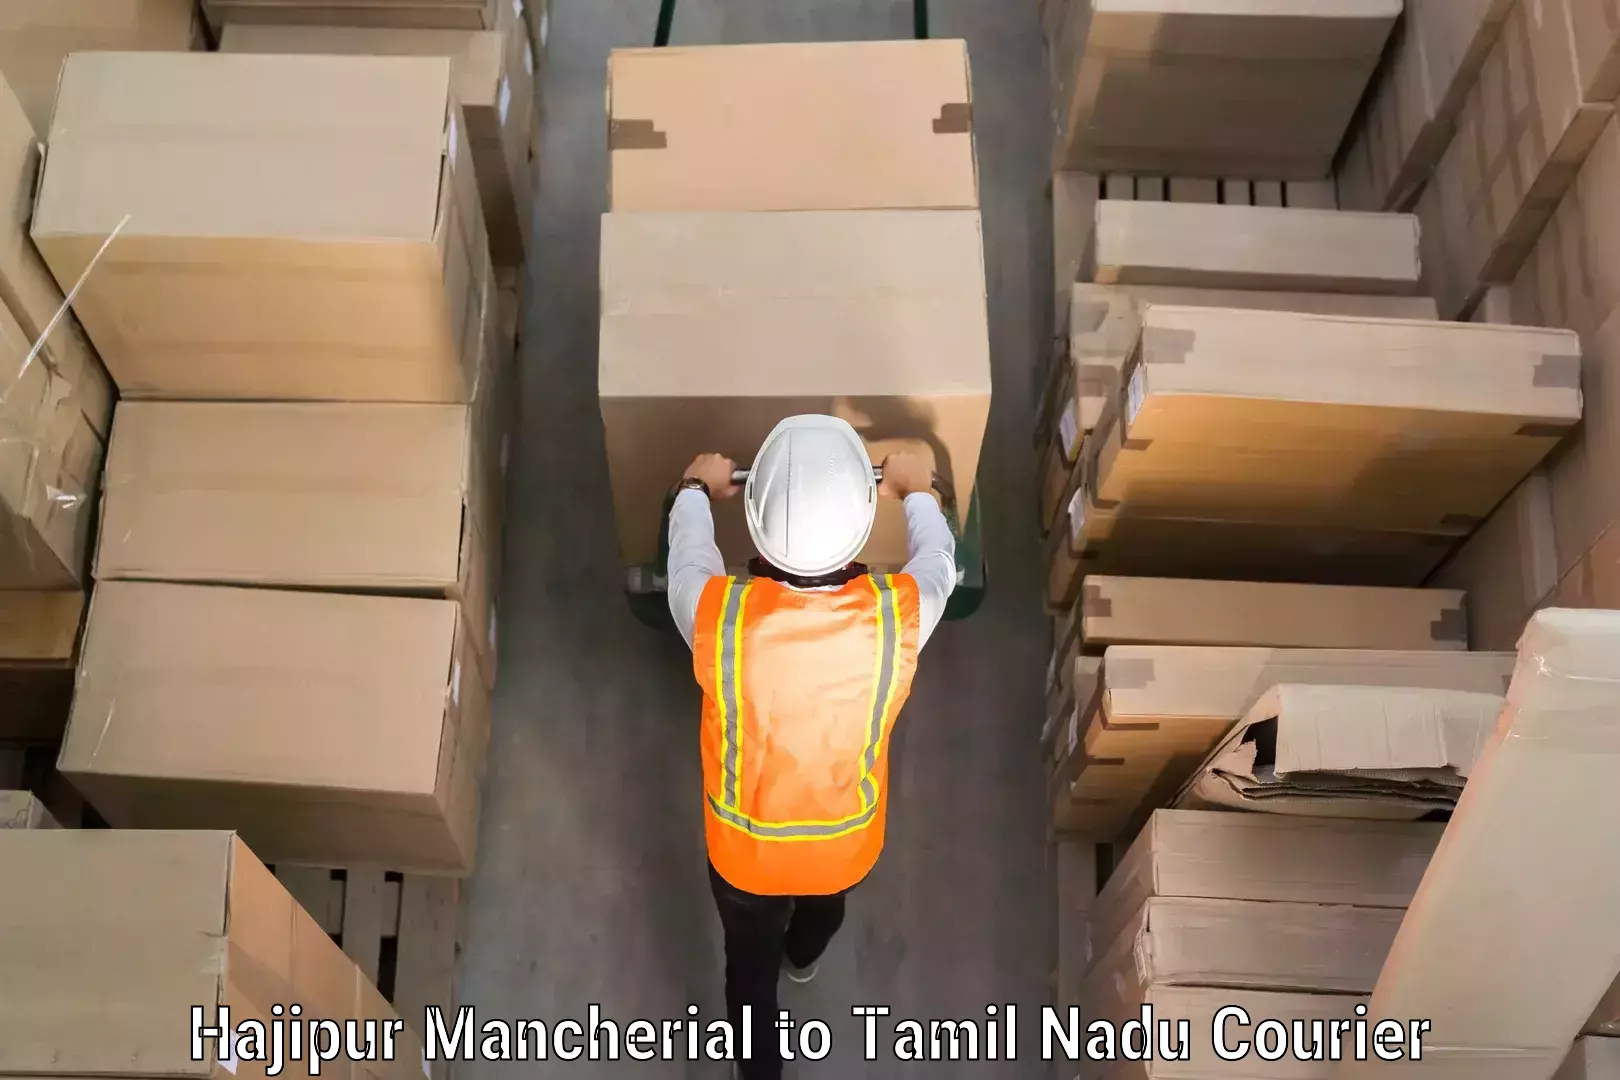 Luggage shipment processing Hajipur Mancherial to Sivaganga